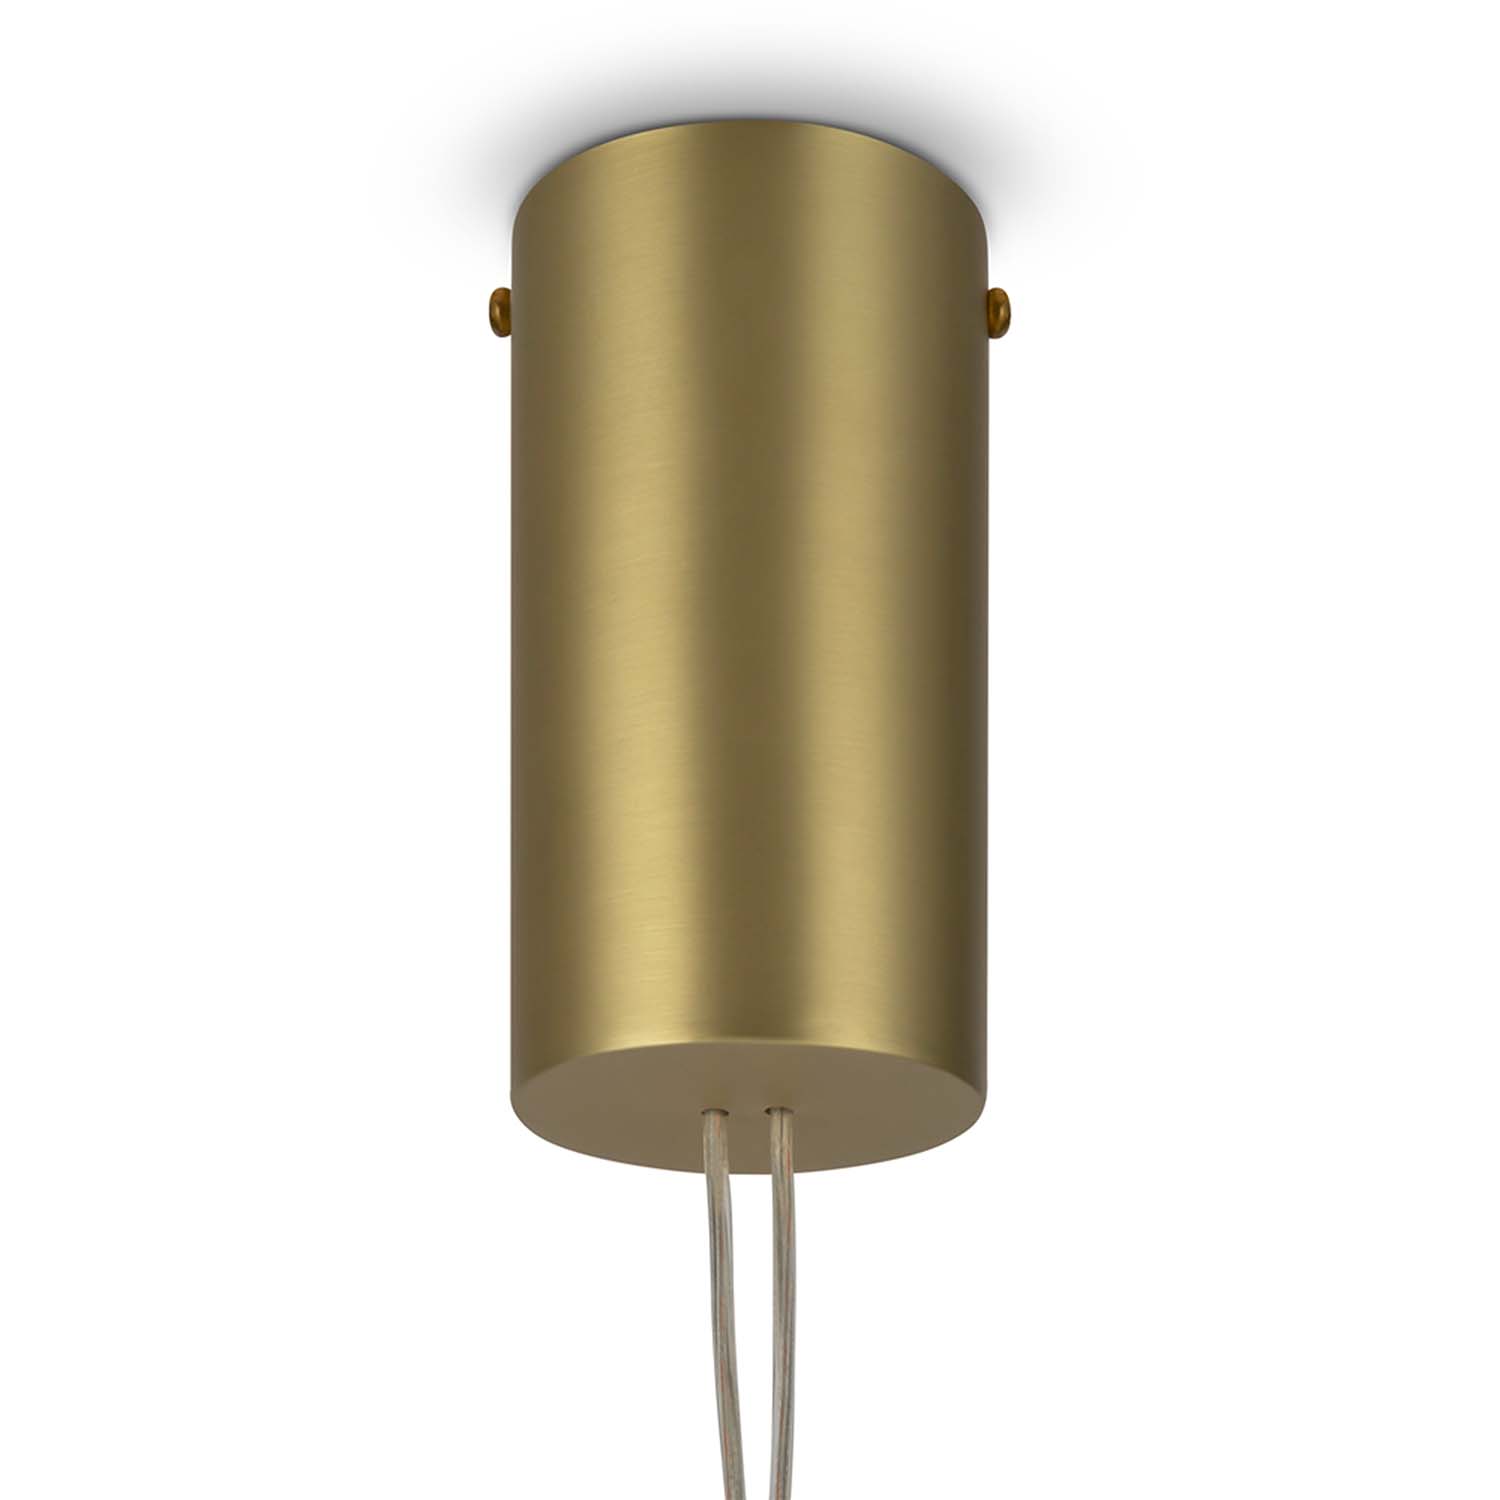 MAYA - Designer pendant light in gold steel and glass